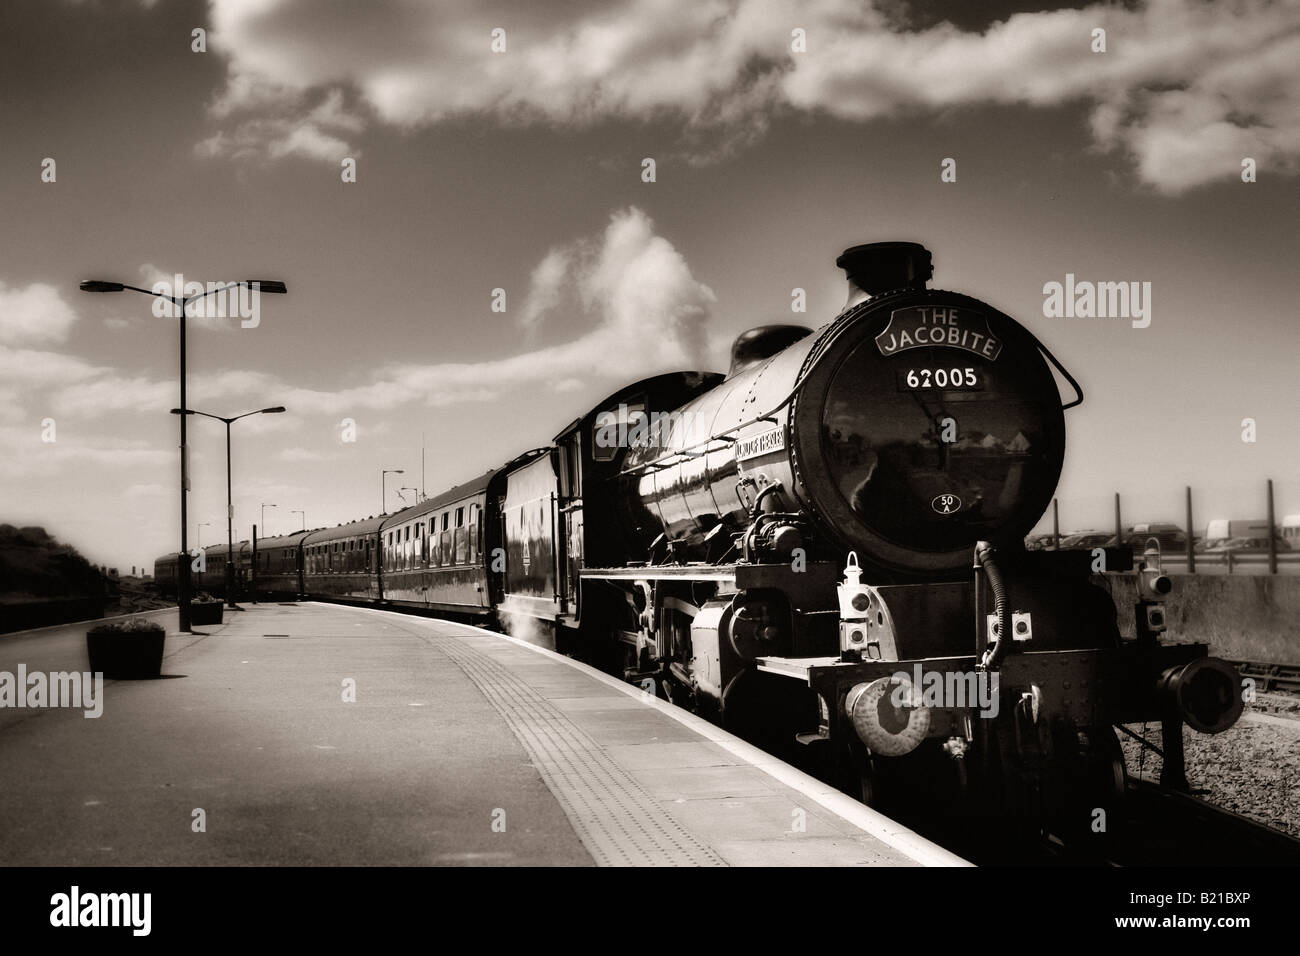 Jacobite steam train Stock Photo